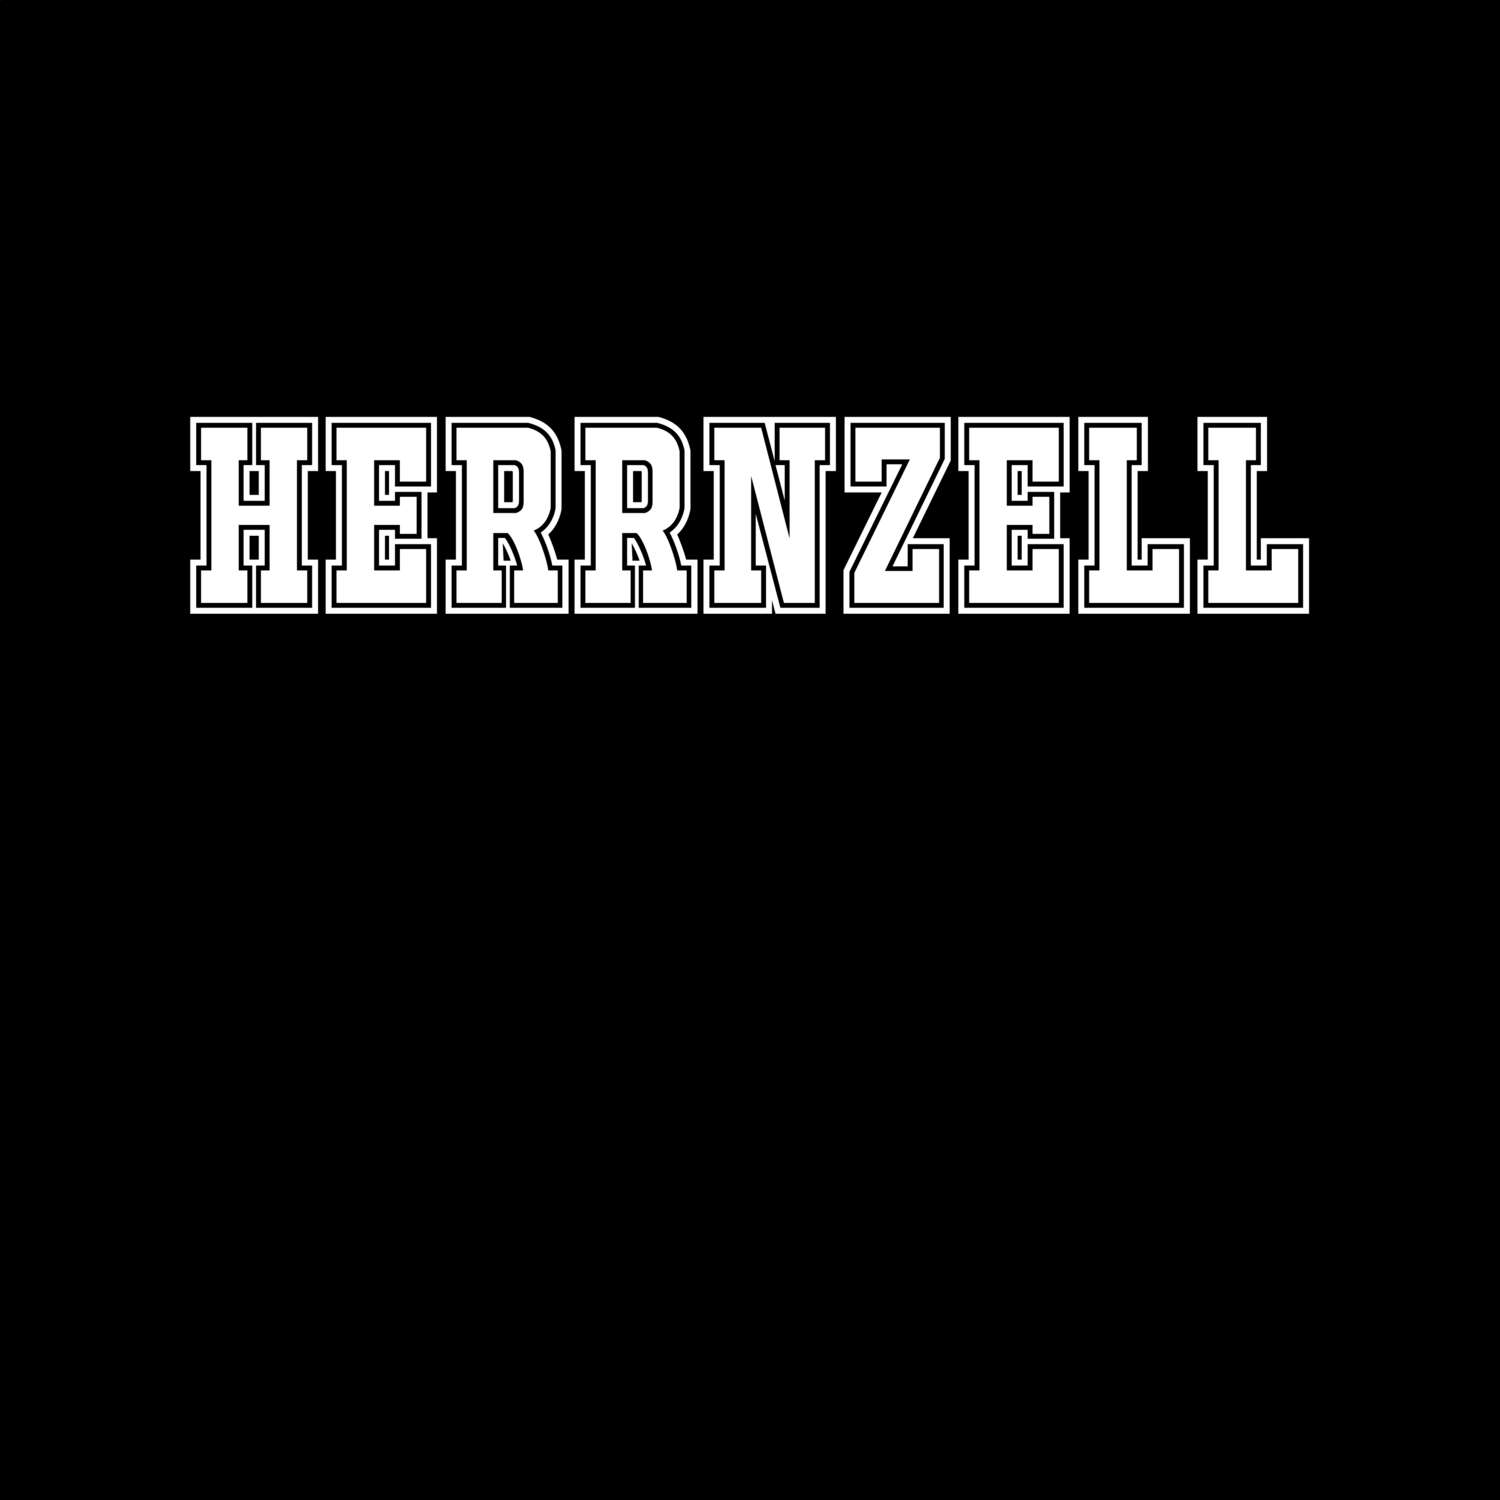 Herrnzell T-Shirt »Classic«